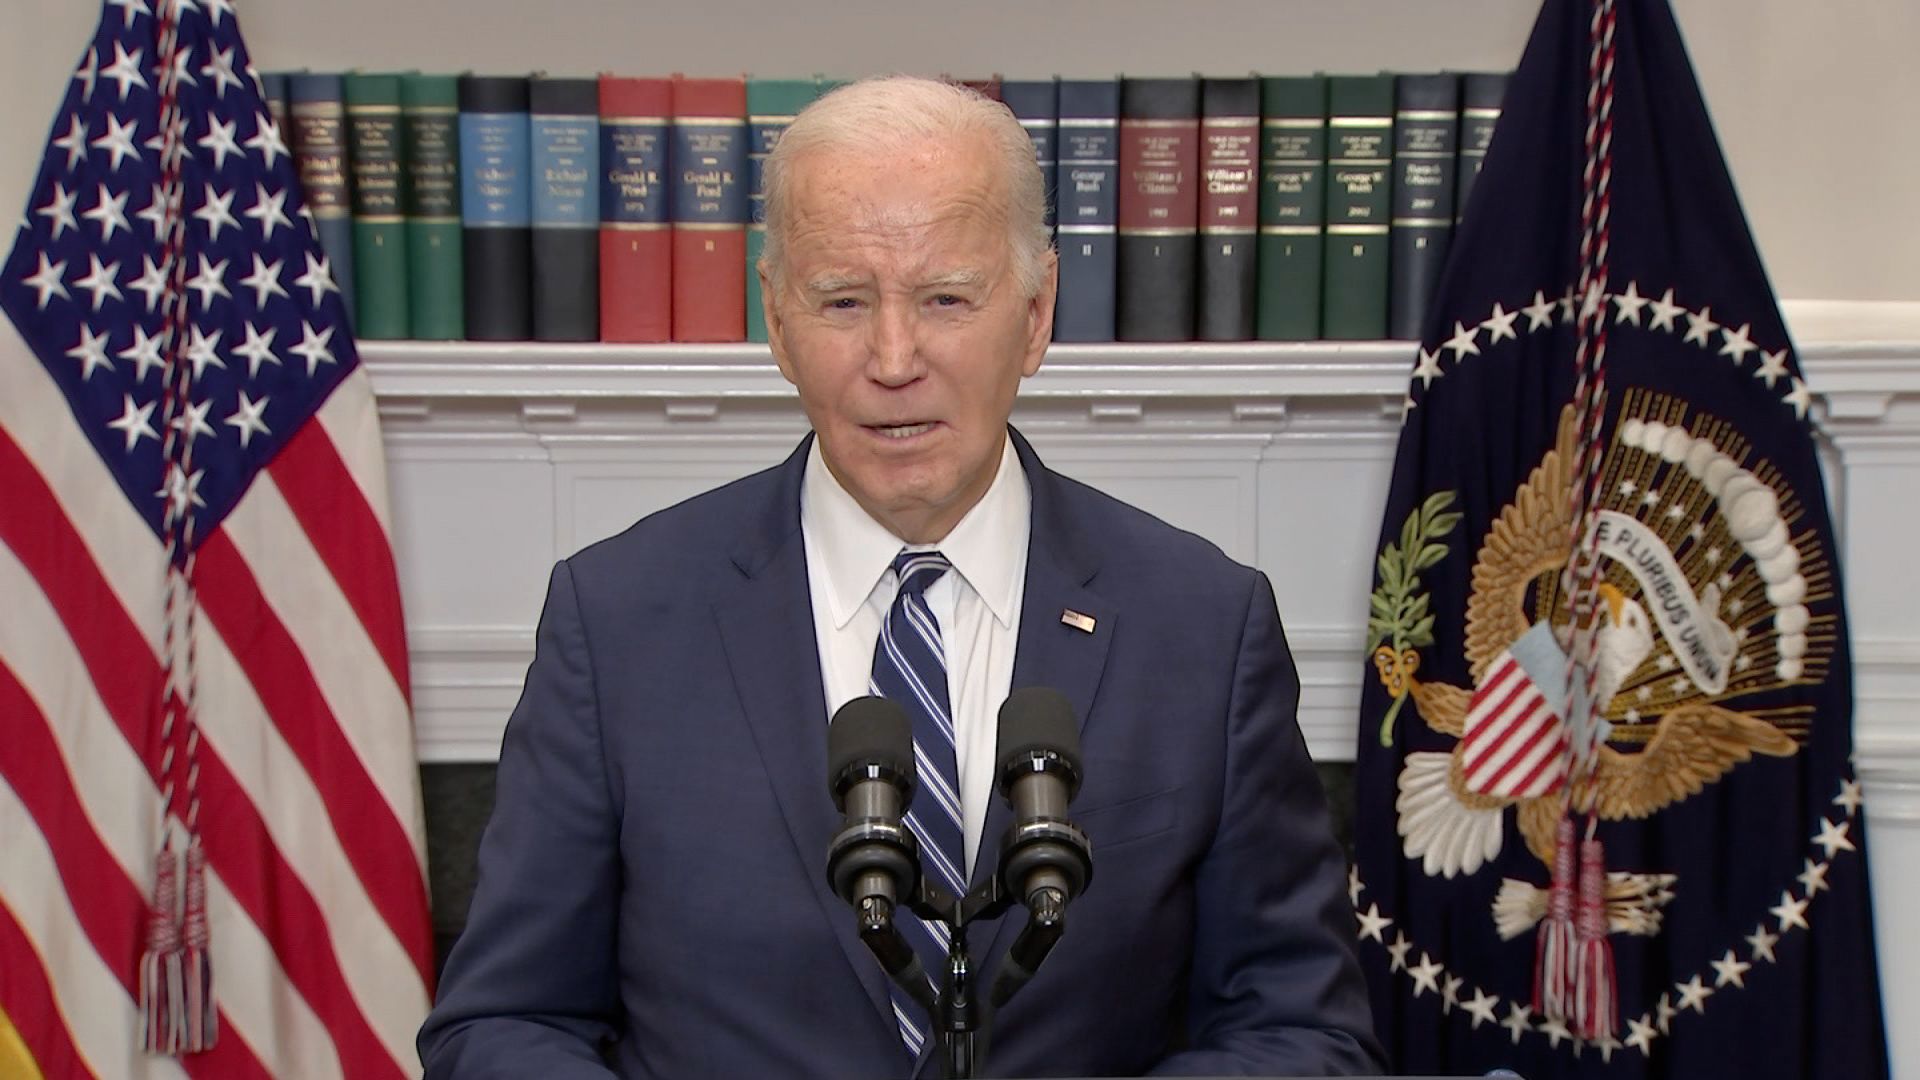 Make no mistake': Joe Biden says Putin is responsible for